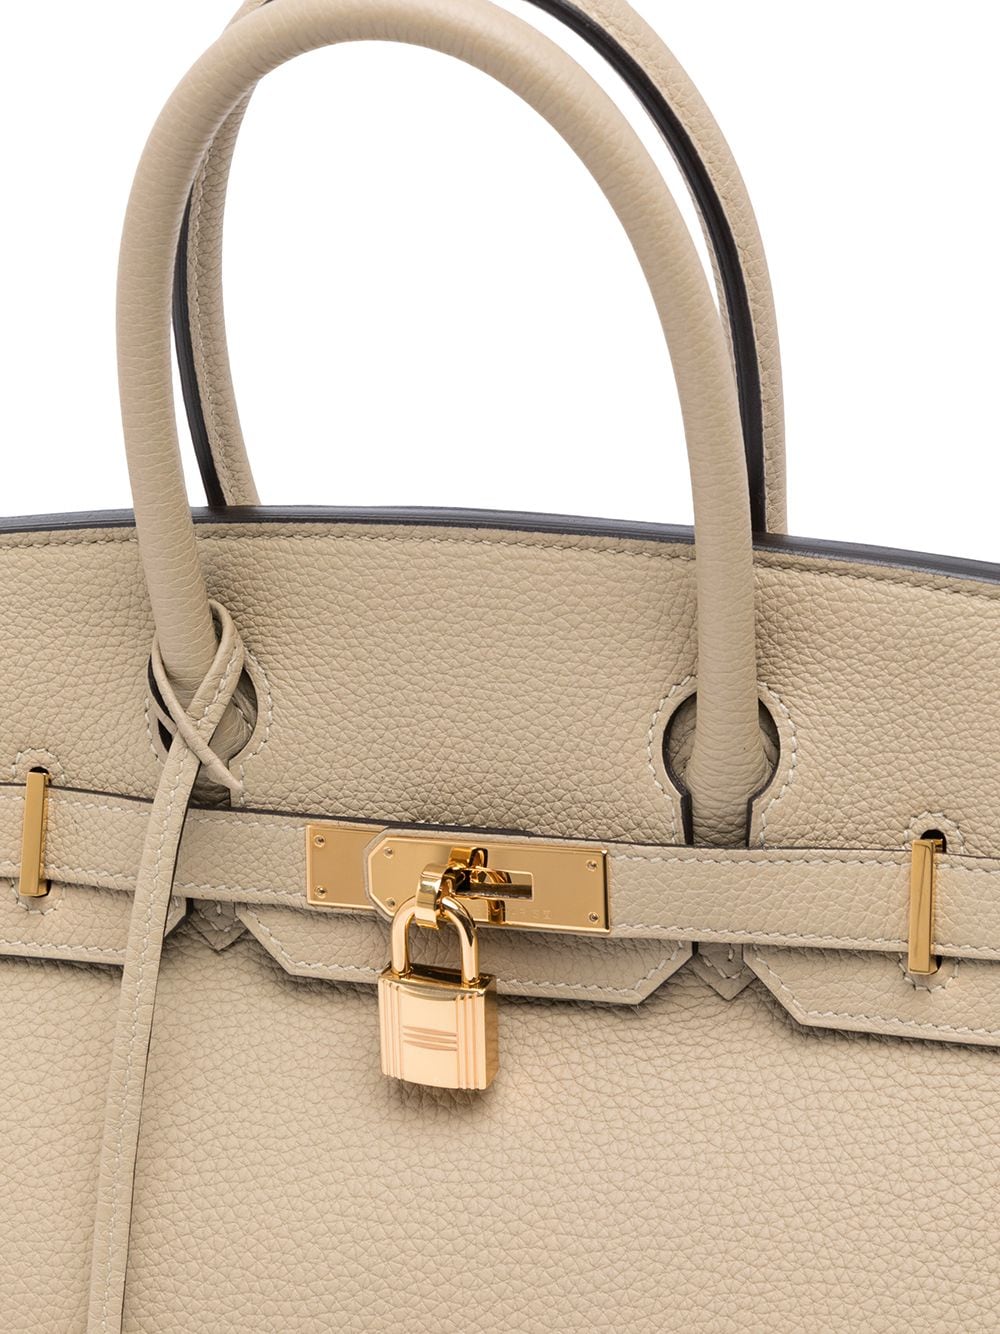 Hermès 2019 Pre-owned Tressage Birkin Bag